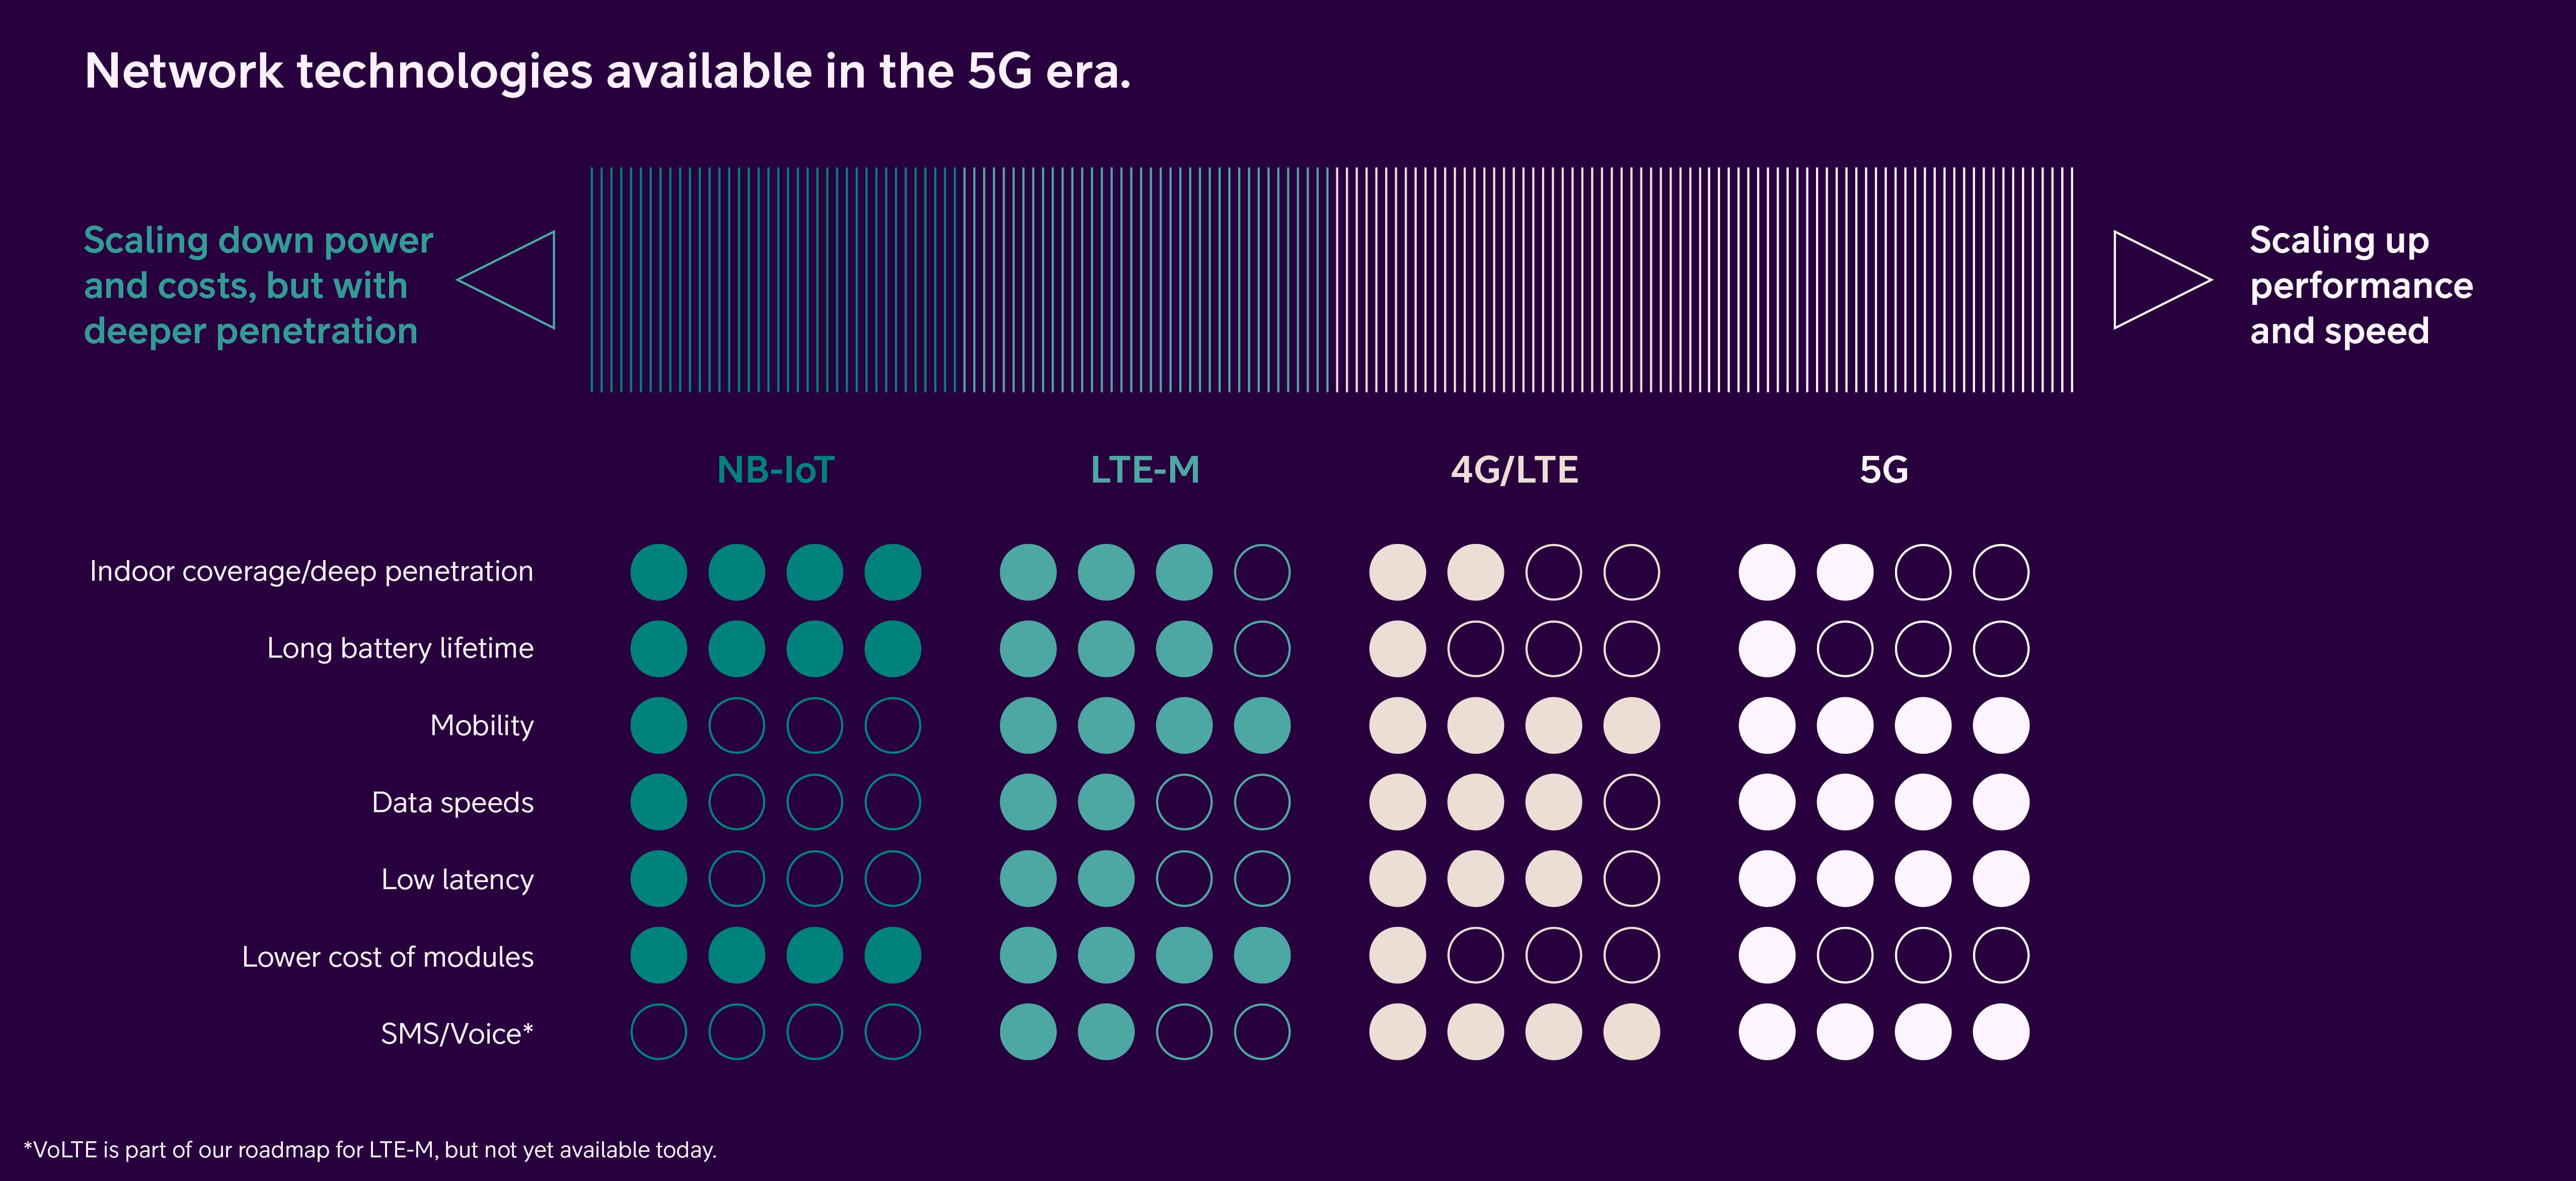 Network technologies in the 5G era Telia Company